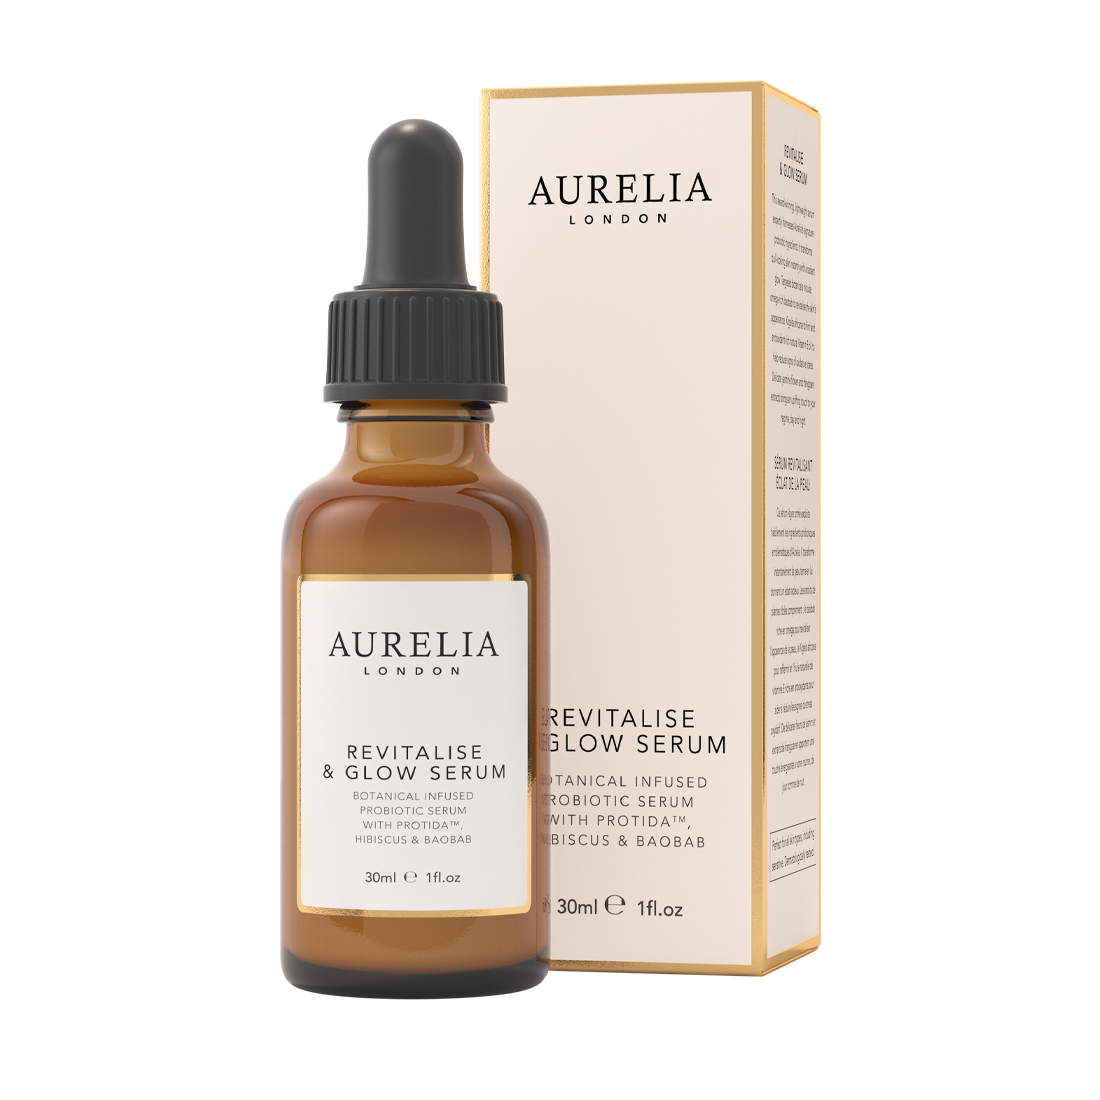 An image of Aurelia London, Revitalise & Glow Serum, 30ml